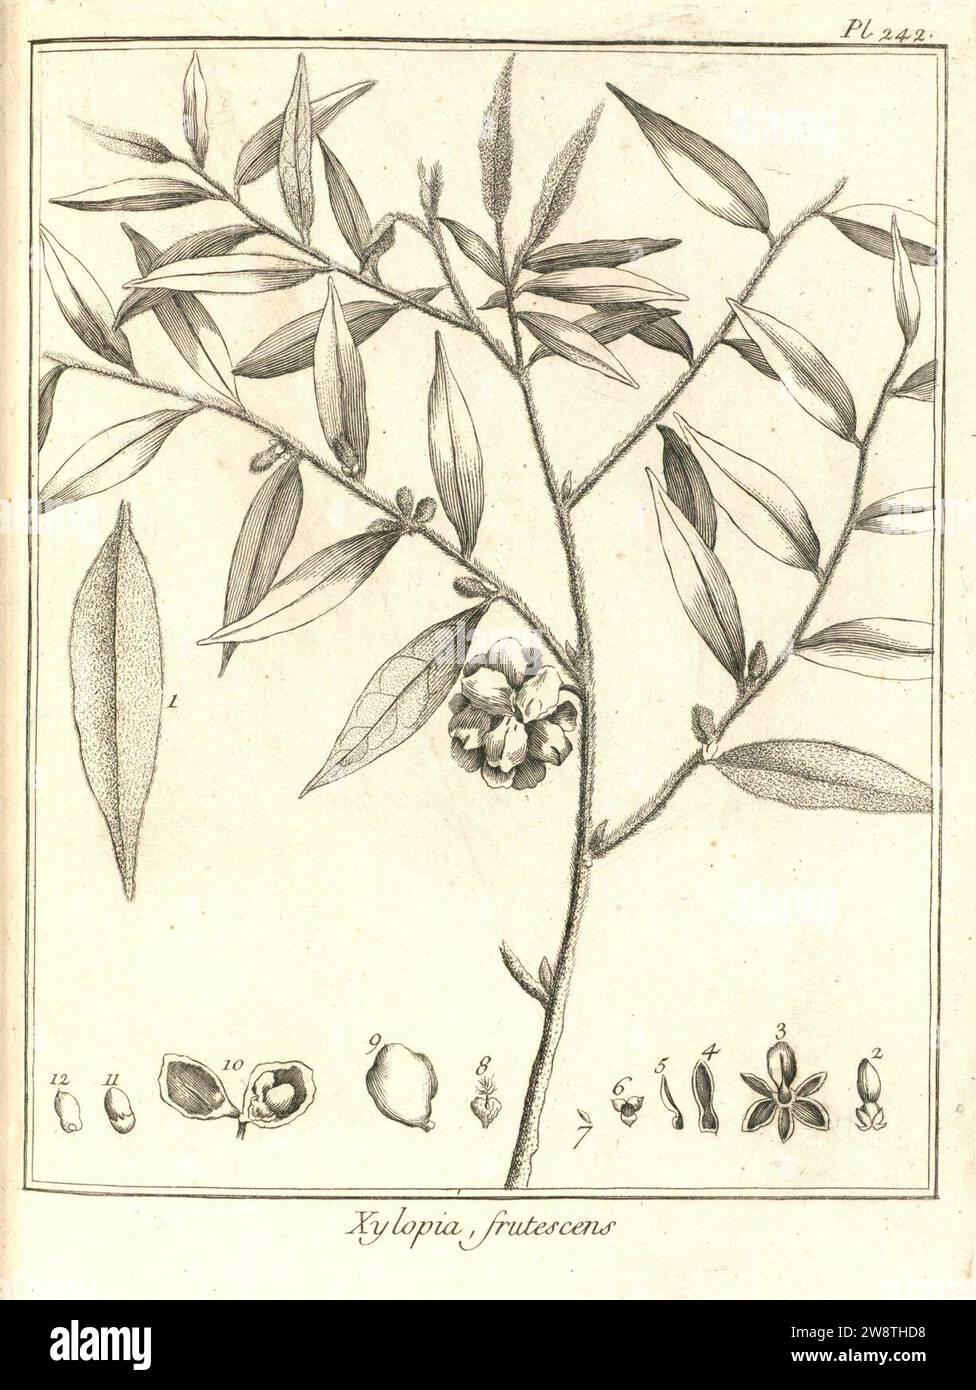 Xylopia frutescens Aublet 1775 pl 242. Stock Photo